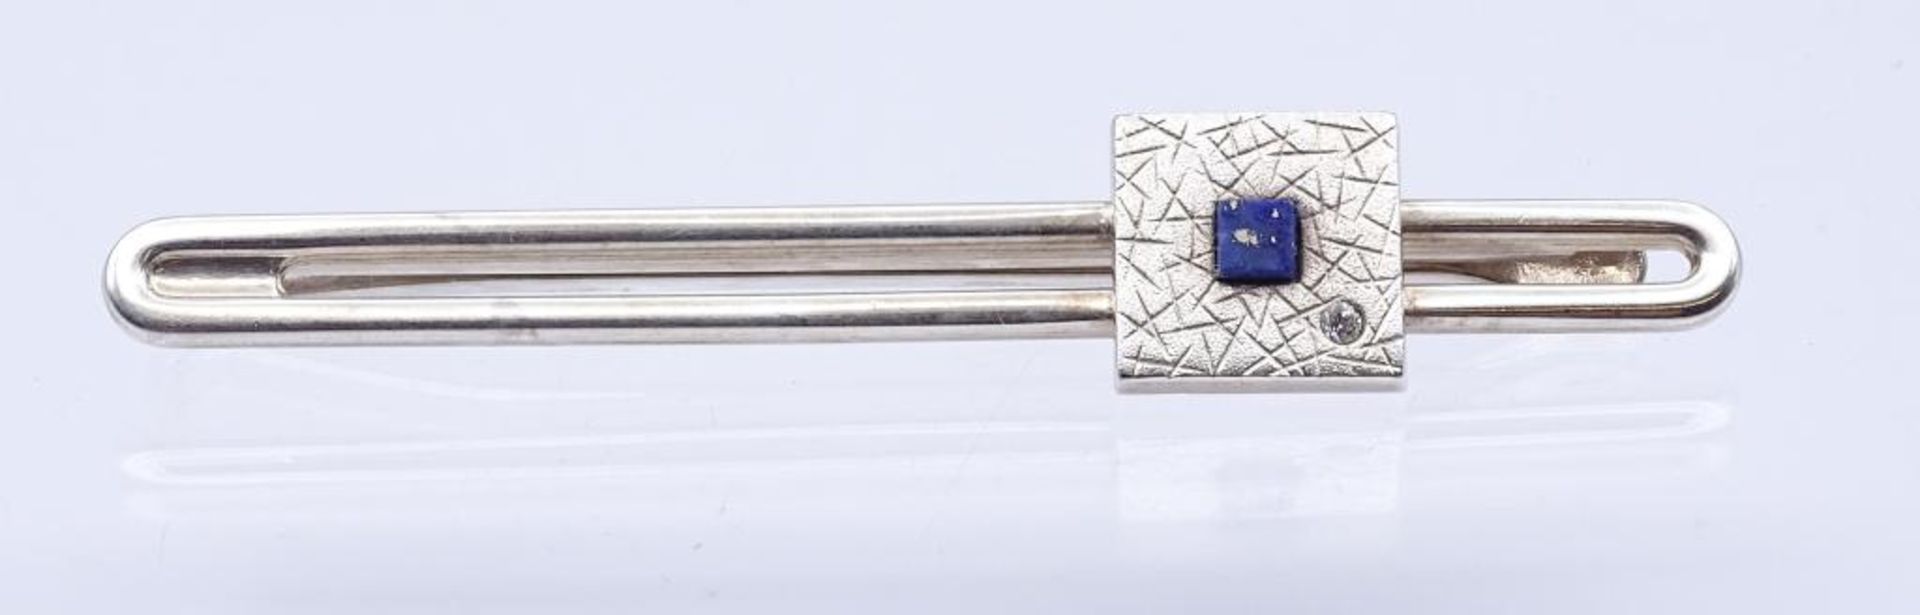 Krawattenklammer, Sterling Silber 925/000, mit Lapisplatte und Zirkon,L- 7,1cm, 11,5gr.- - -22.